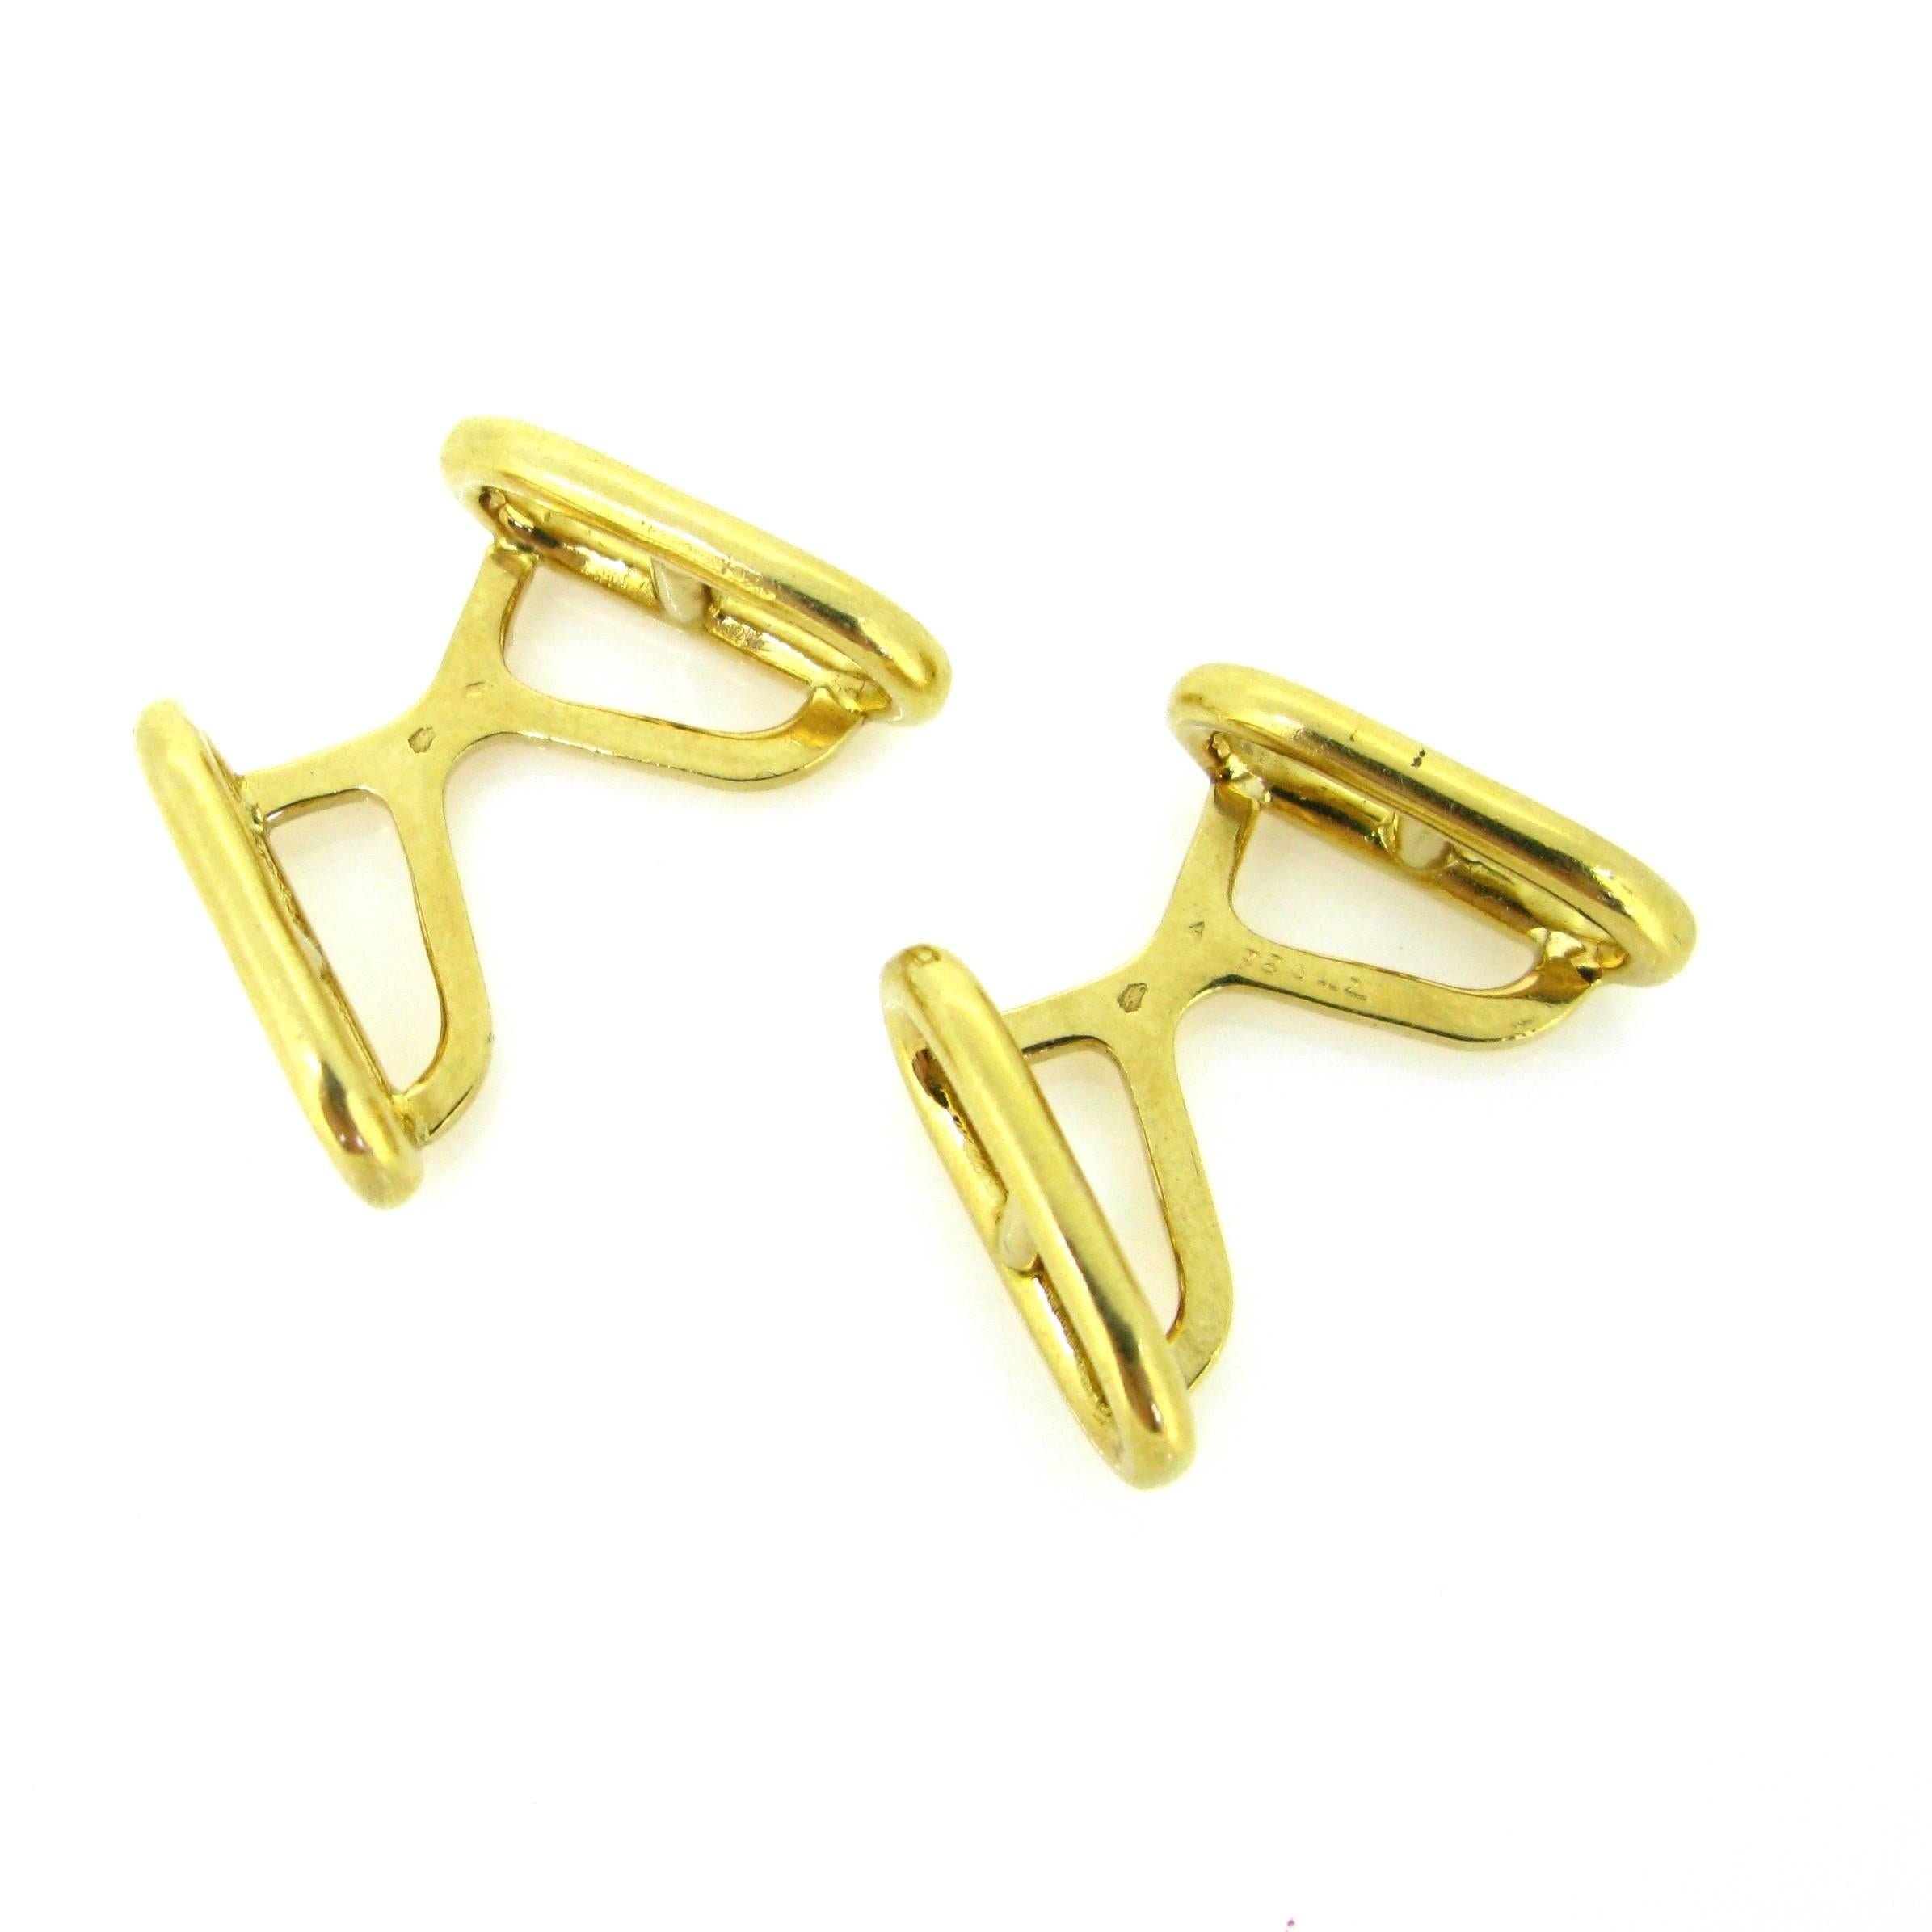 Modern Marine Yellow Gold Cufflinks by Hermes Paris